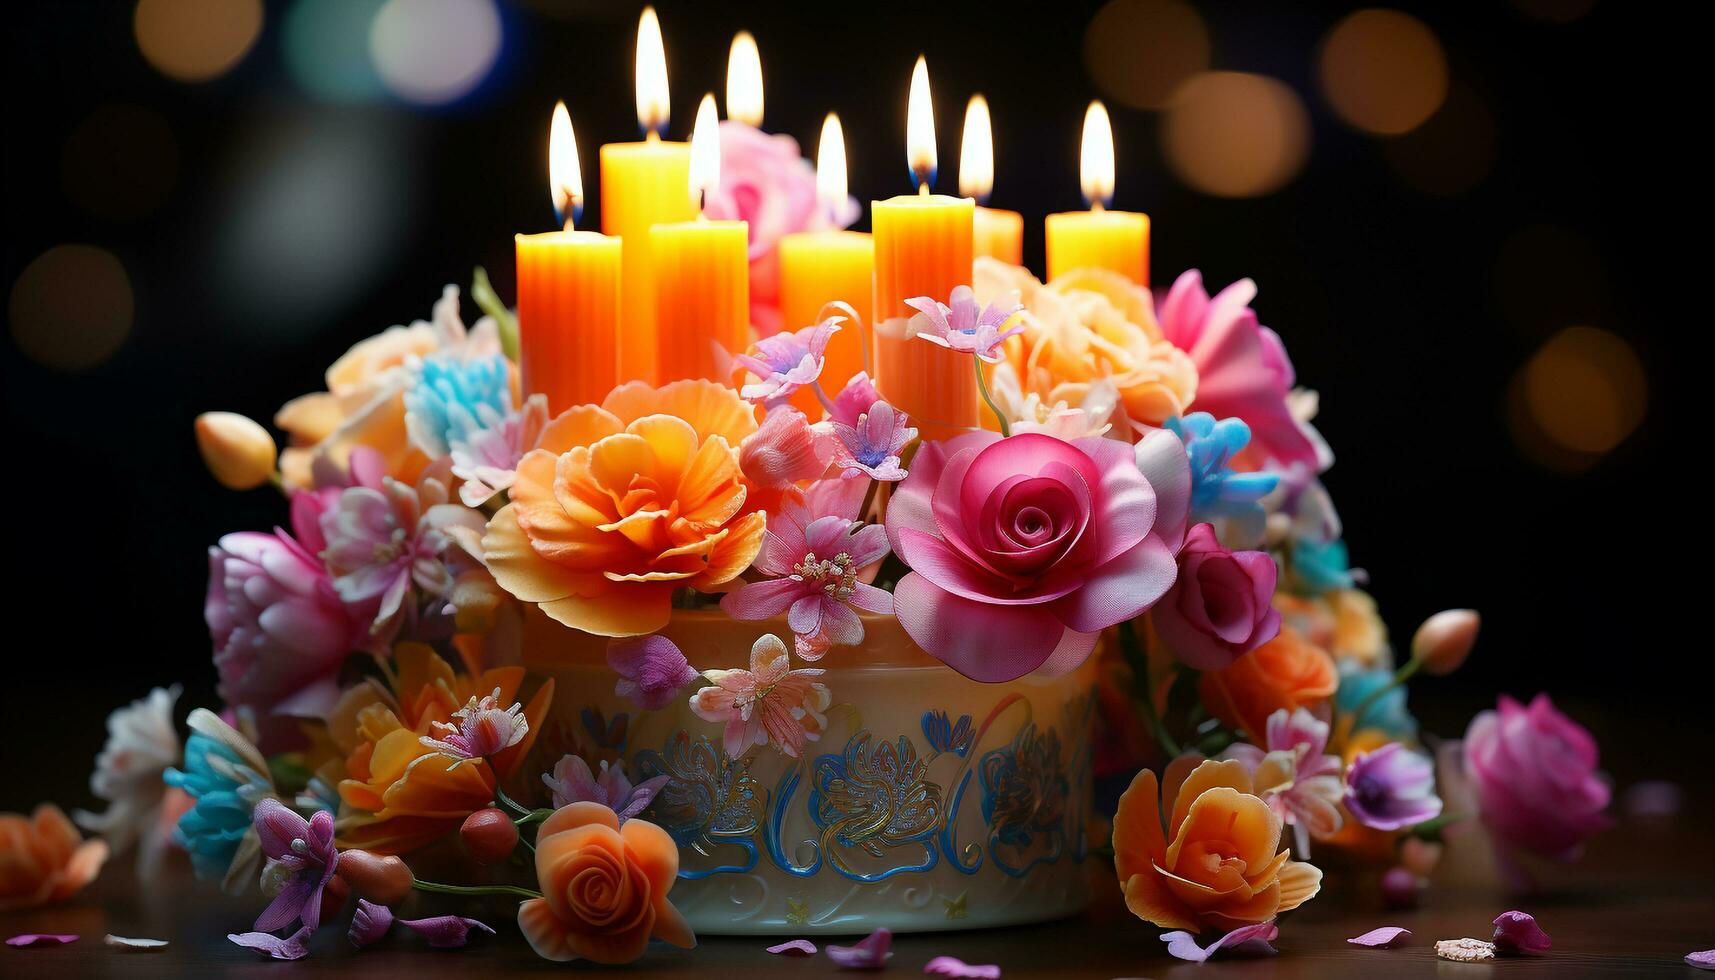 Romantic candlelight illuminates a glowing bouquet symbolizing love and spirituality generated by AI photo